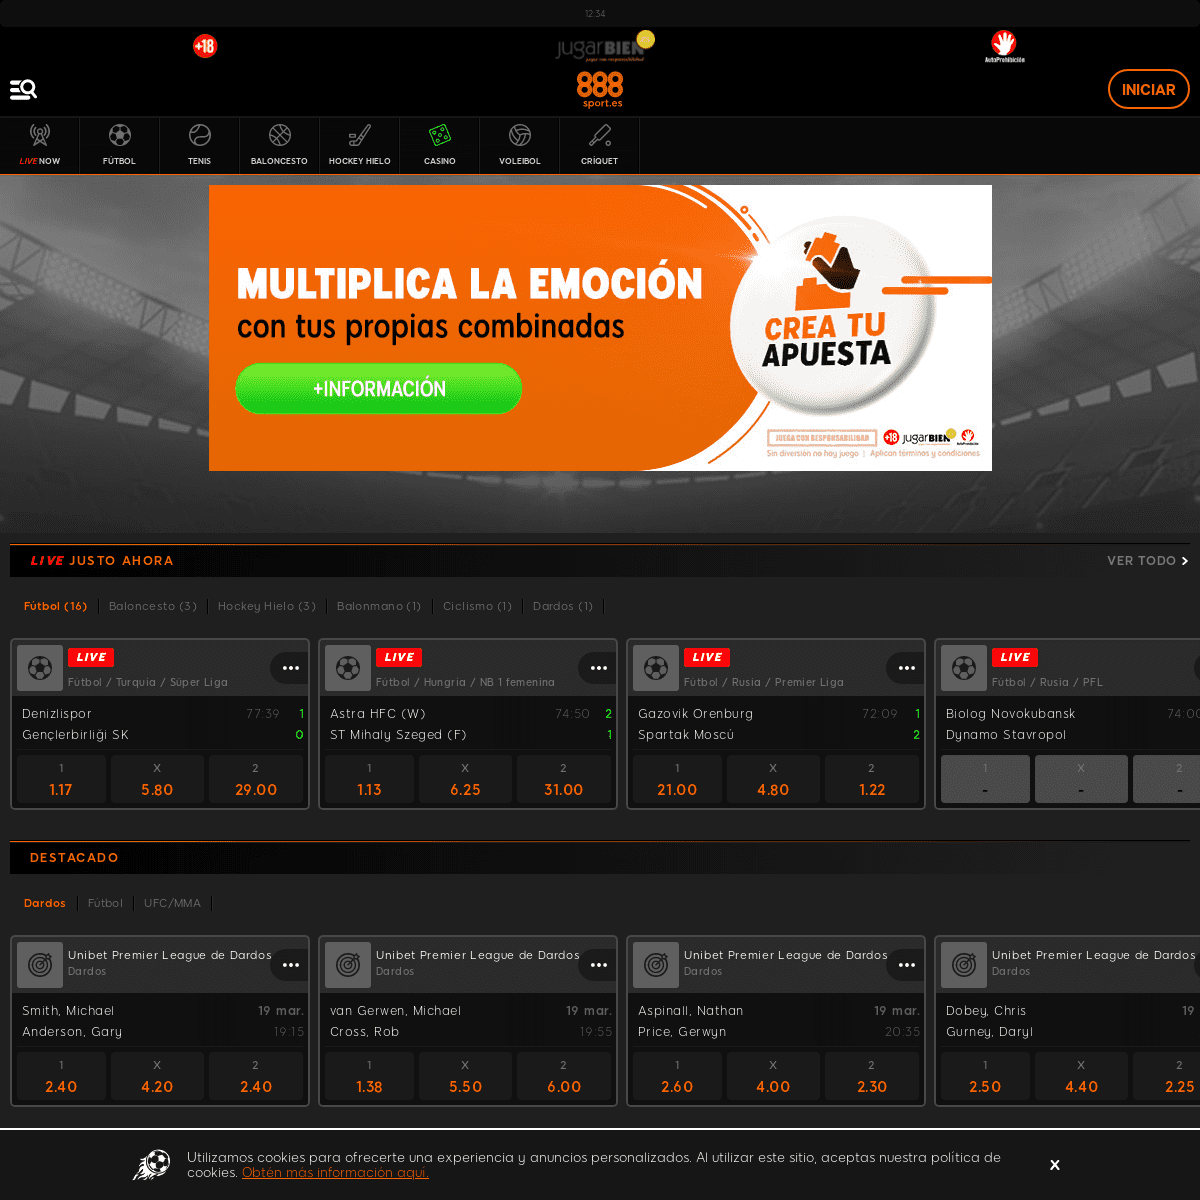 A complete backup of 888sport.es